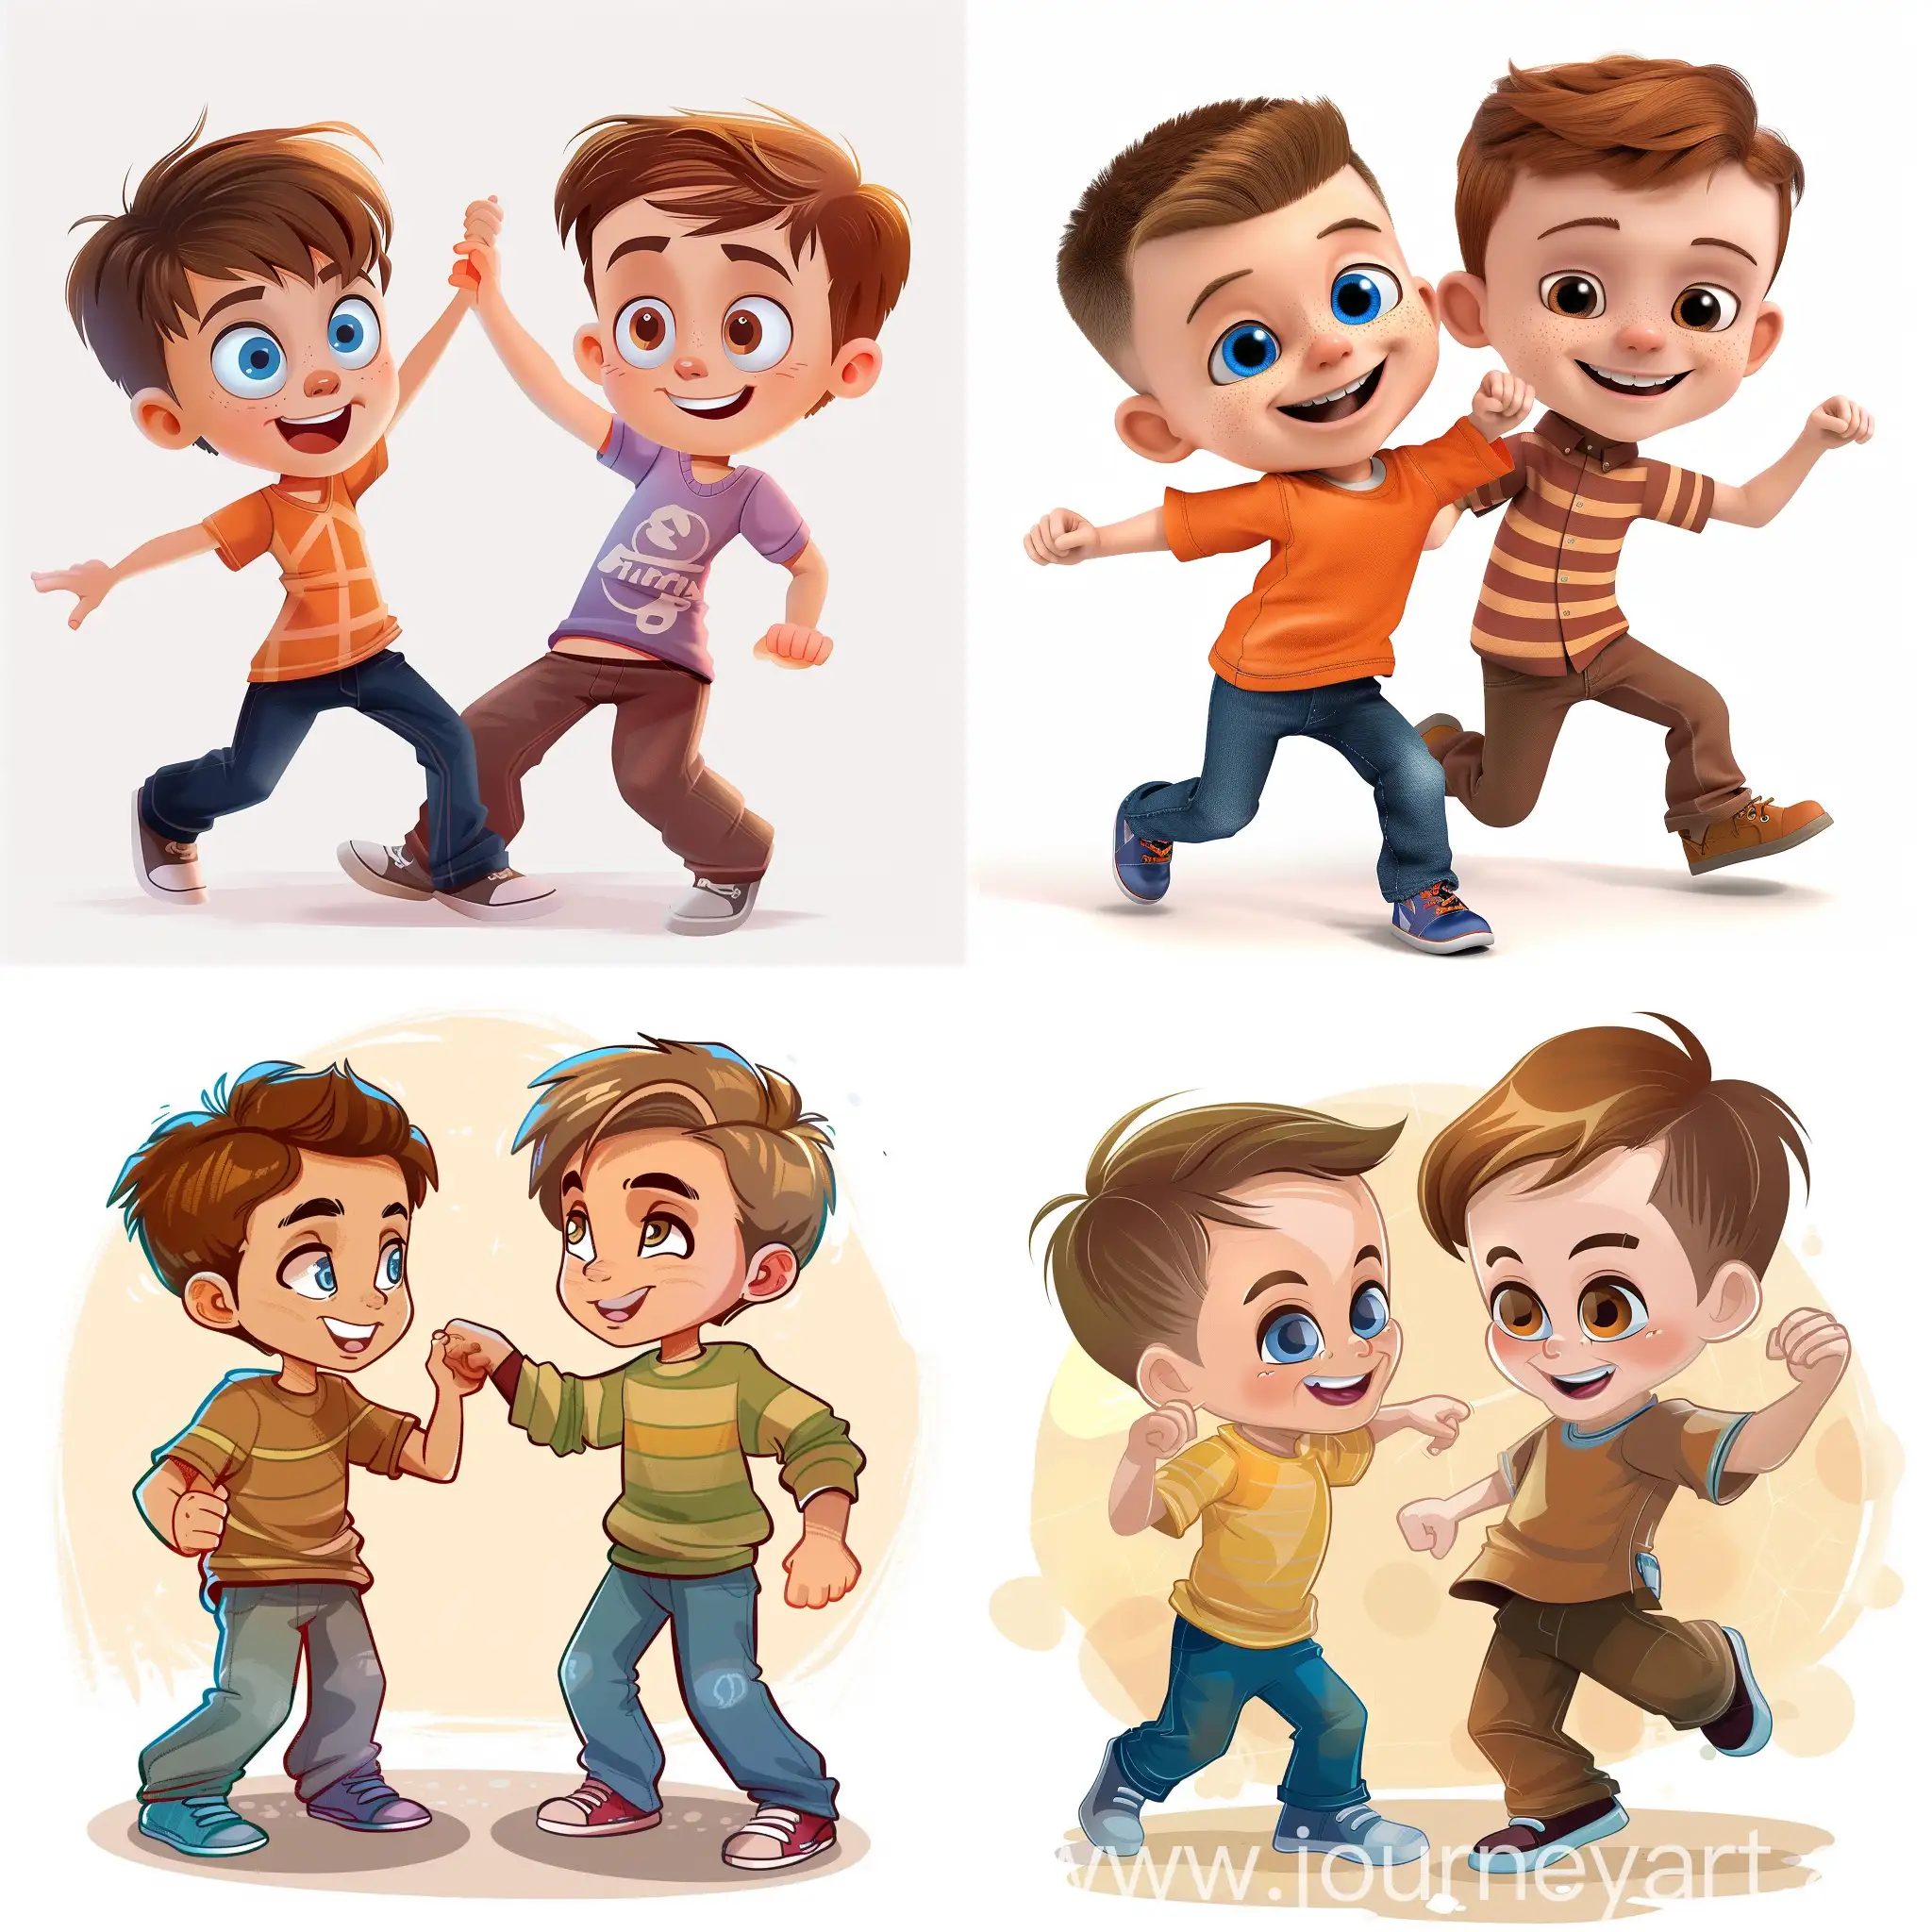 Energetic-Boys-Dancing-with-Joy-in-Cartoon-Style